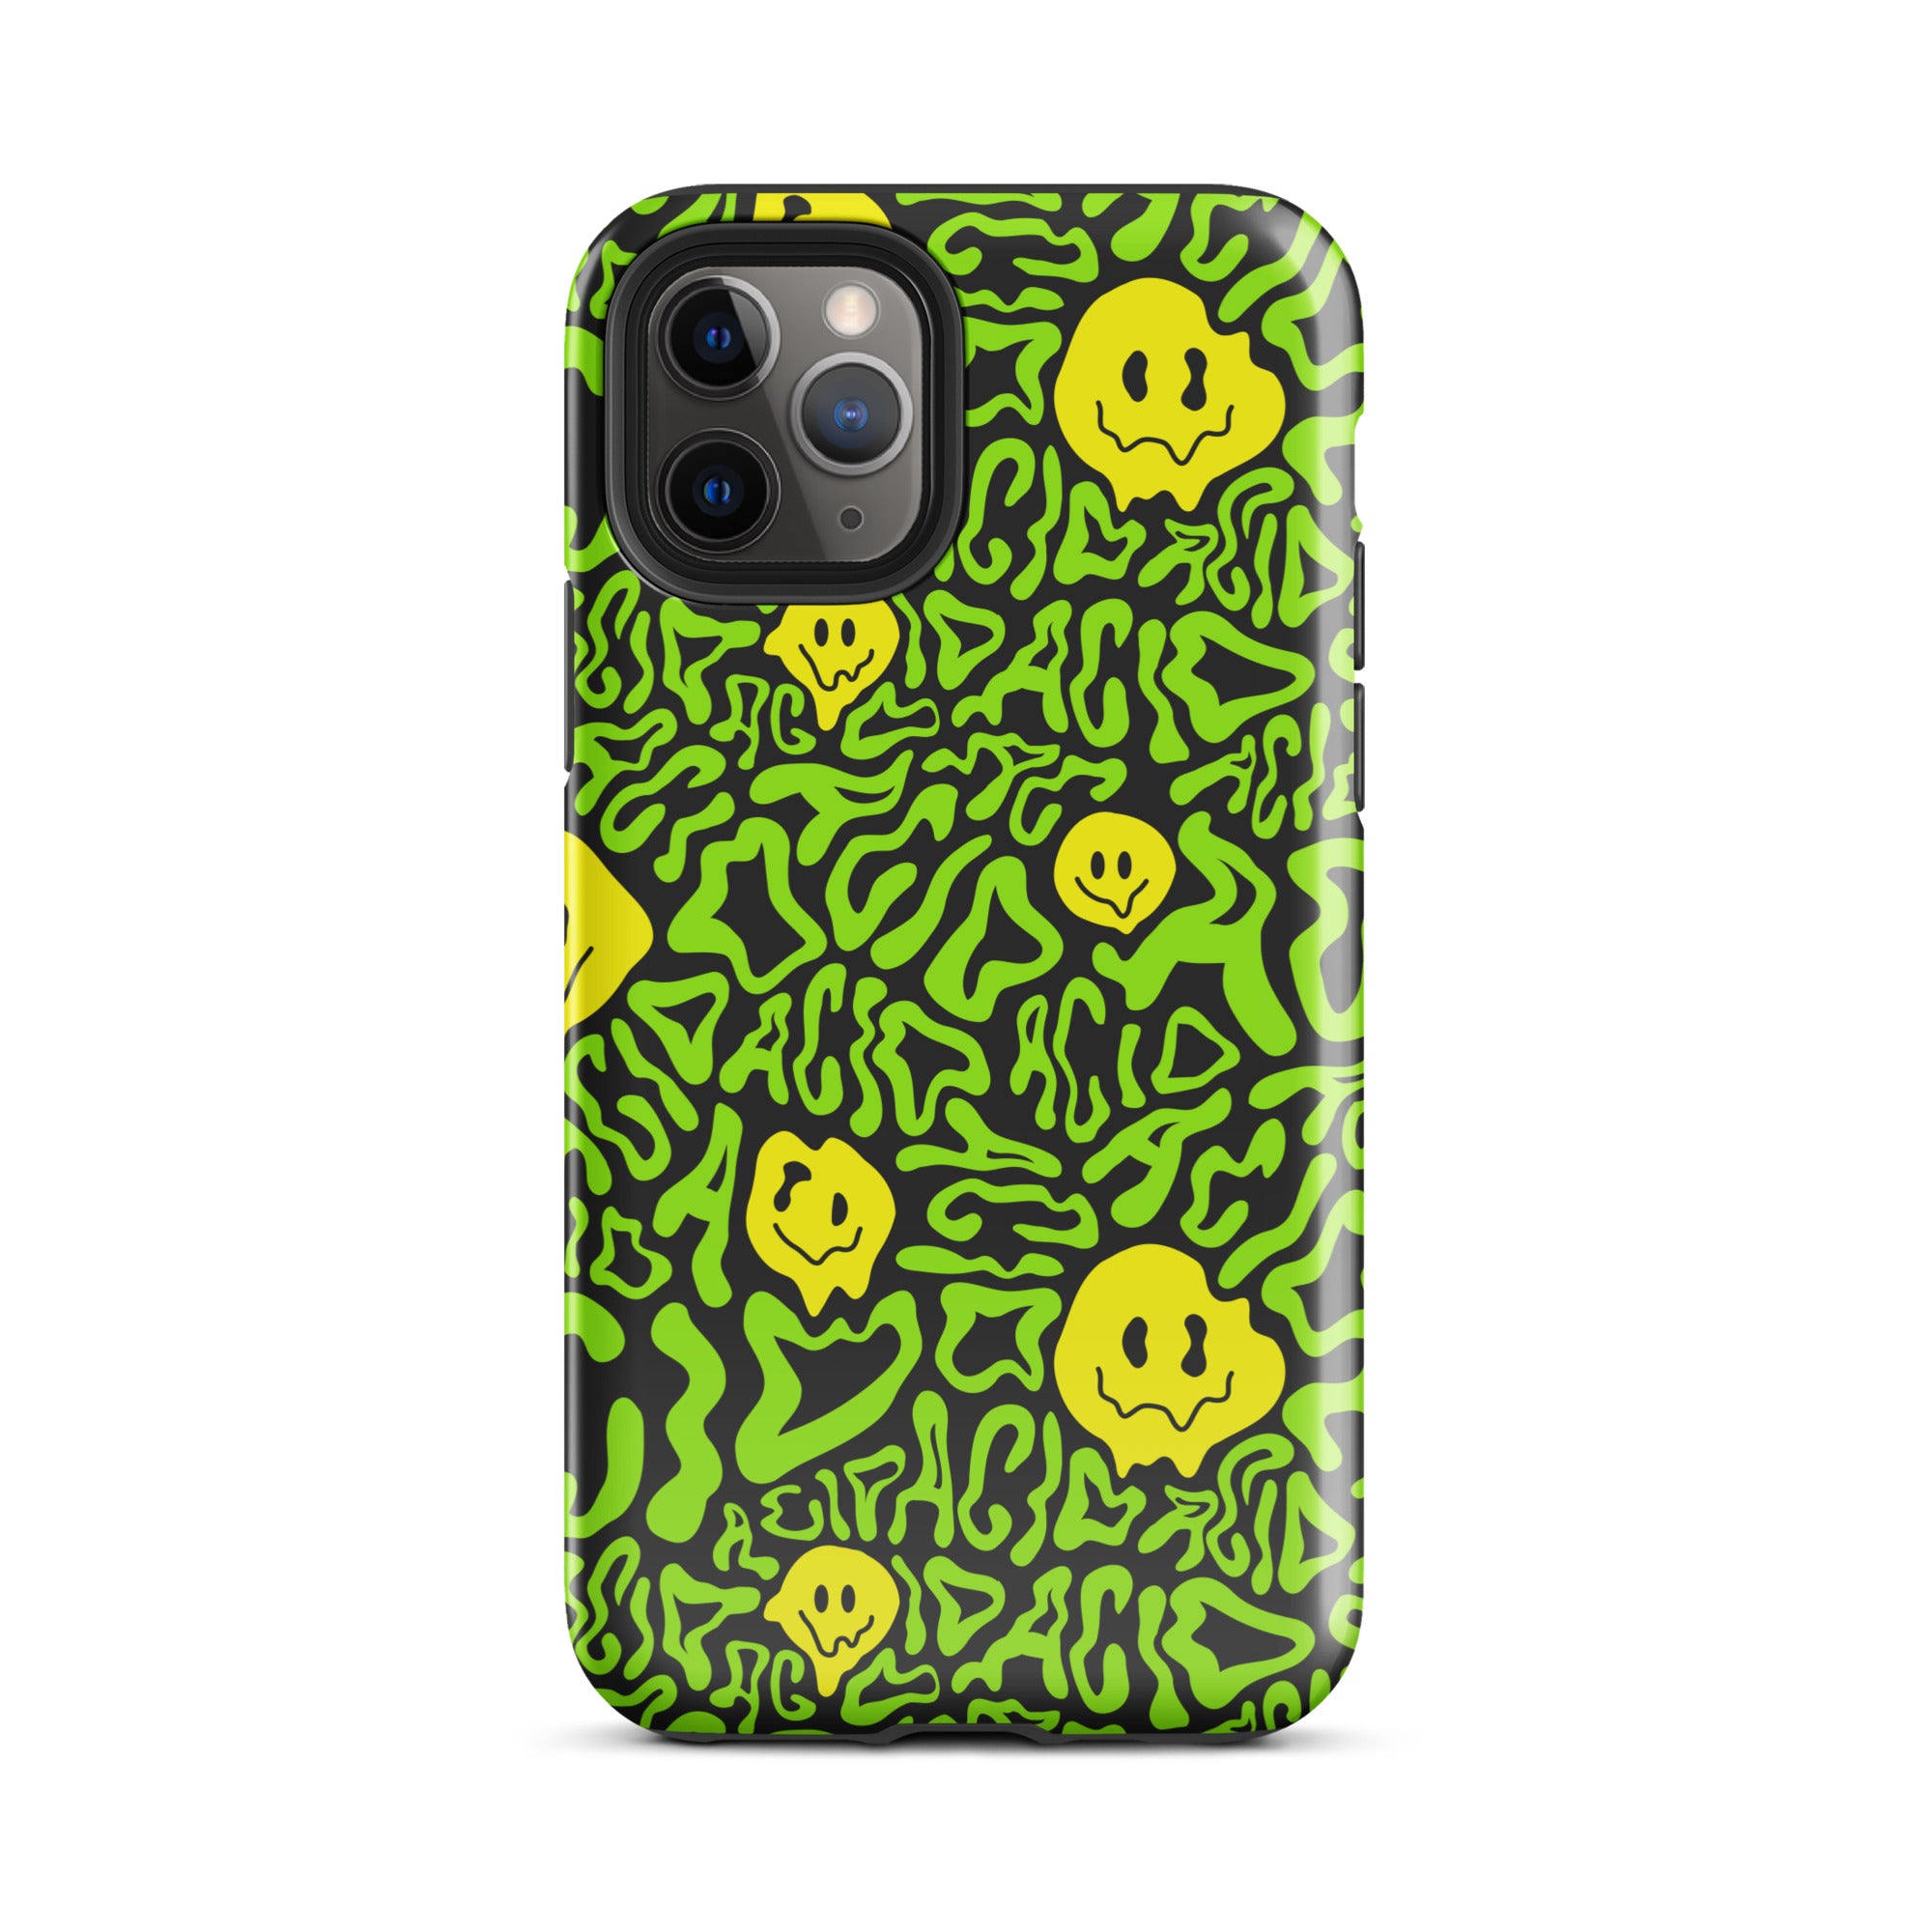 Acid Smilez Tough Case for iPhone®